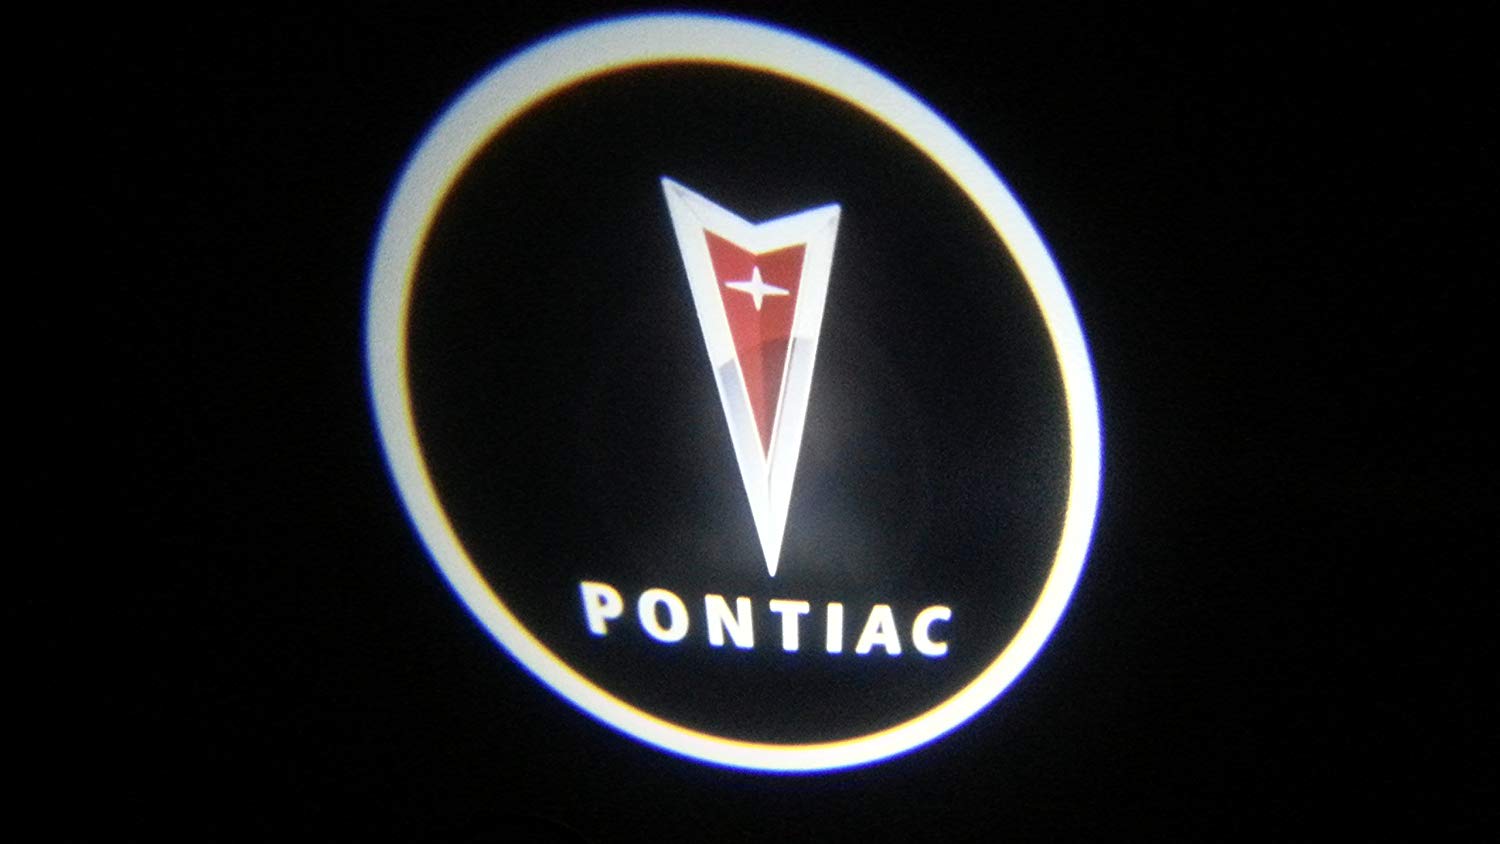 Pontiac Logo - Amazon.com: WIRELESS Pontiac Ghost Door Logo Projector Shadow Puddle ...